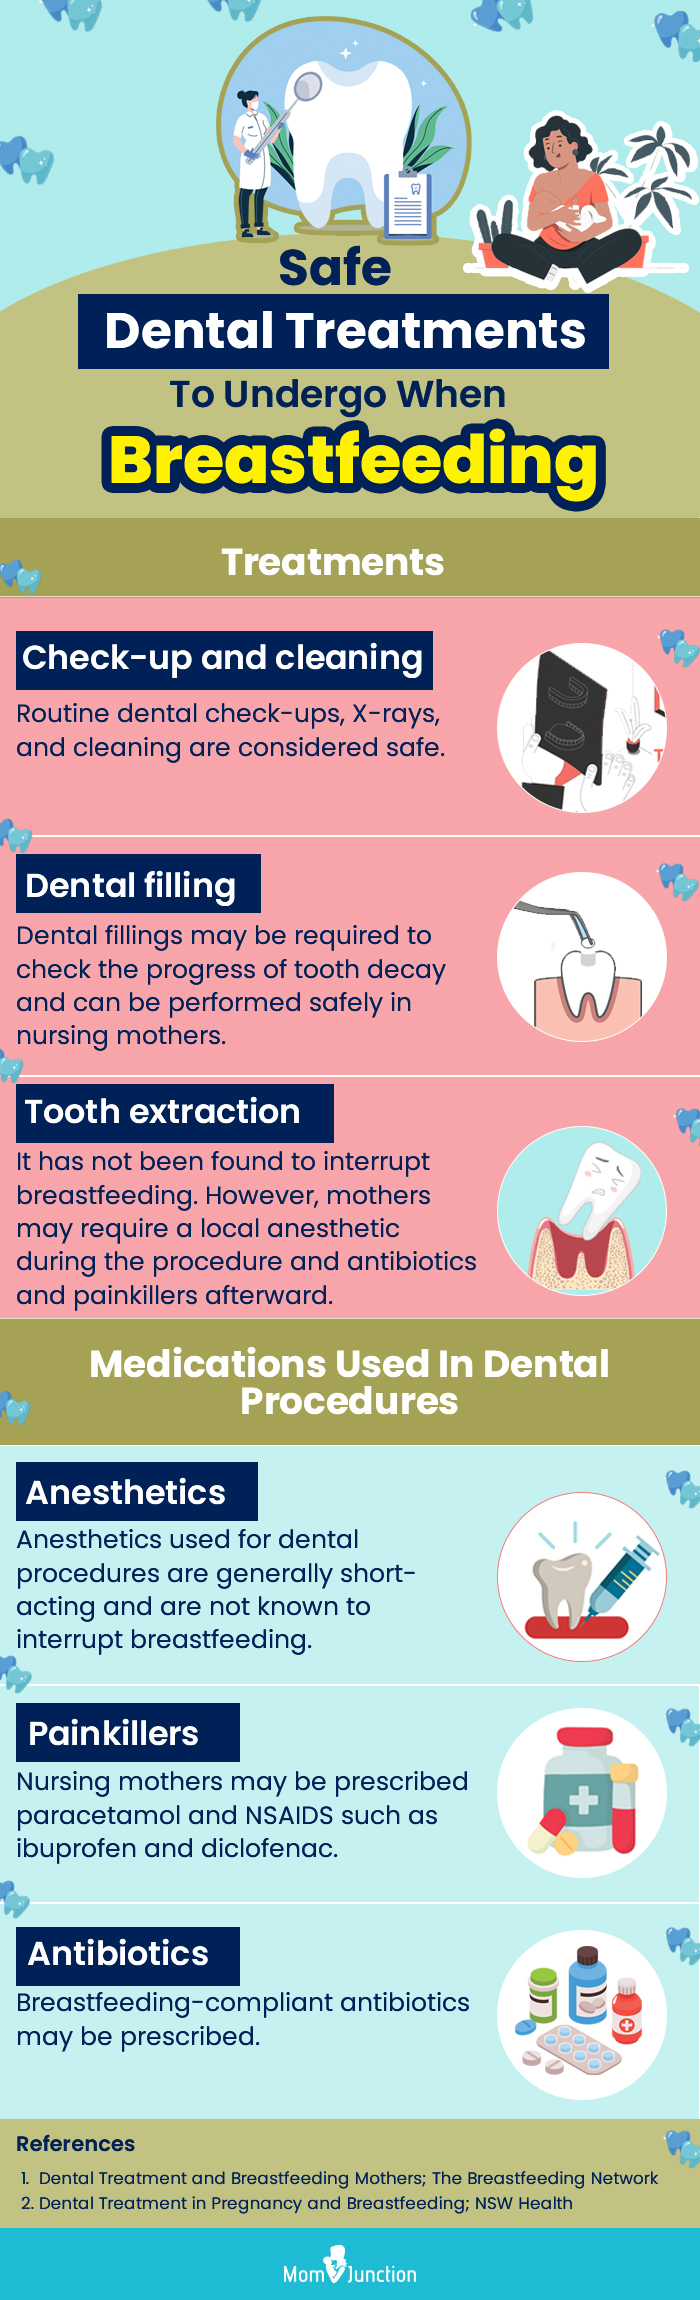 safe dental treatments to undergo when breastfeeding (infographic)